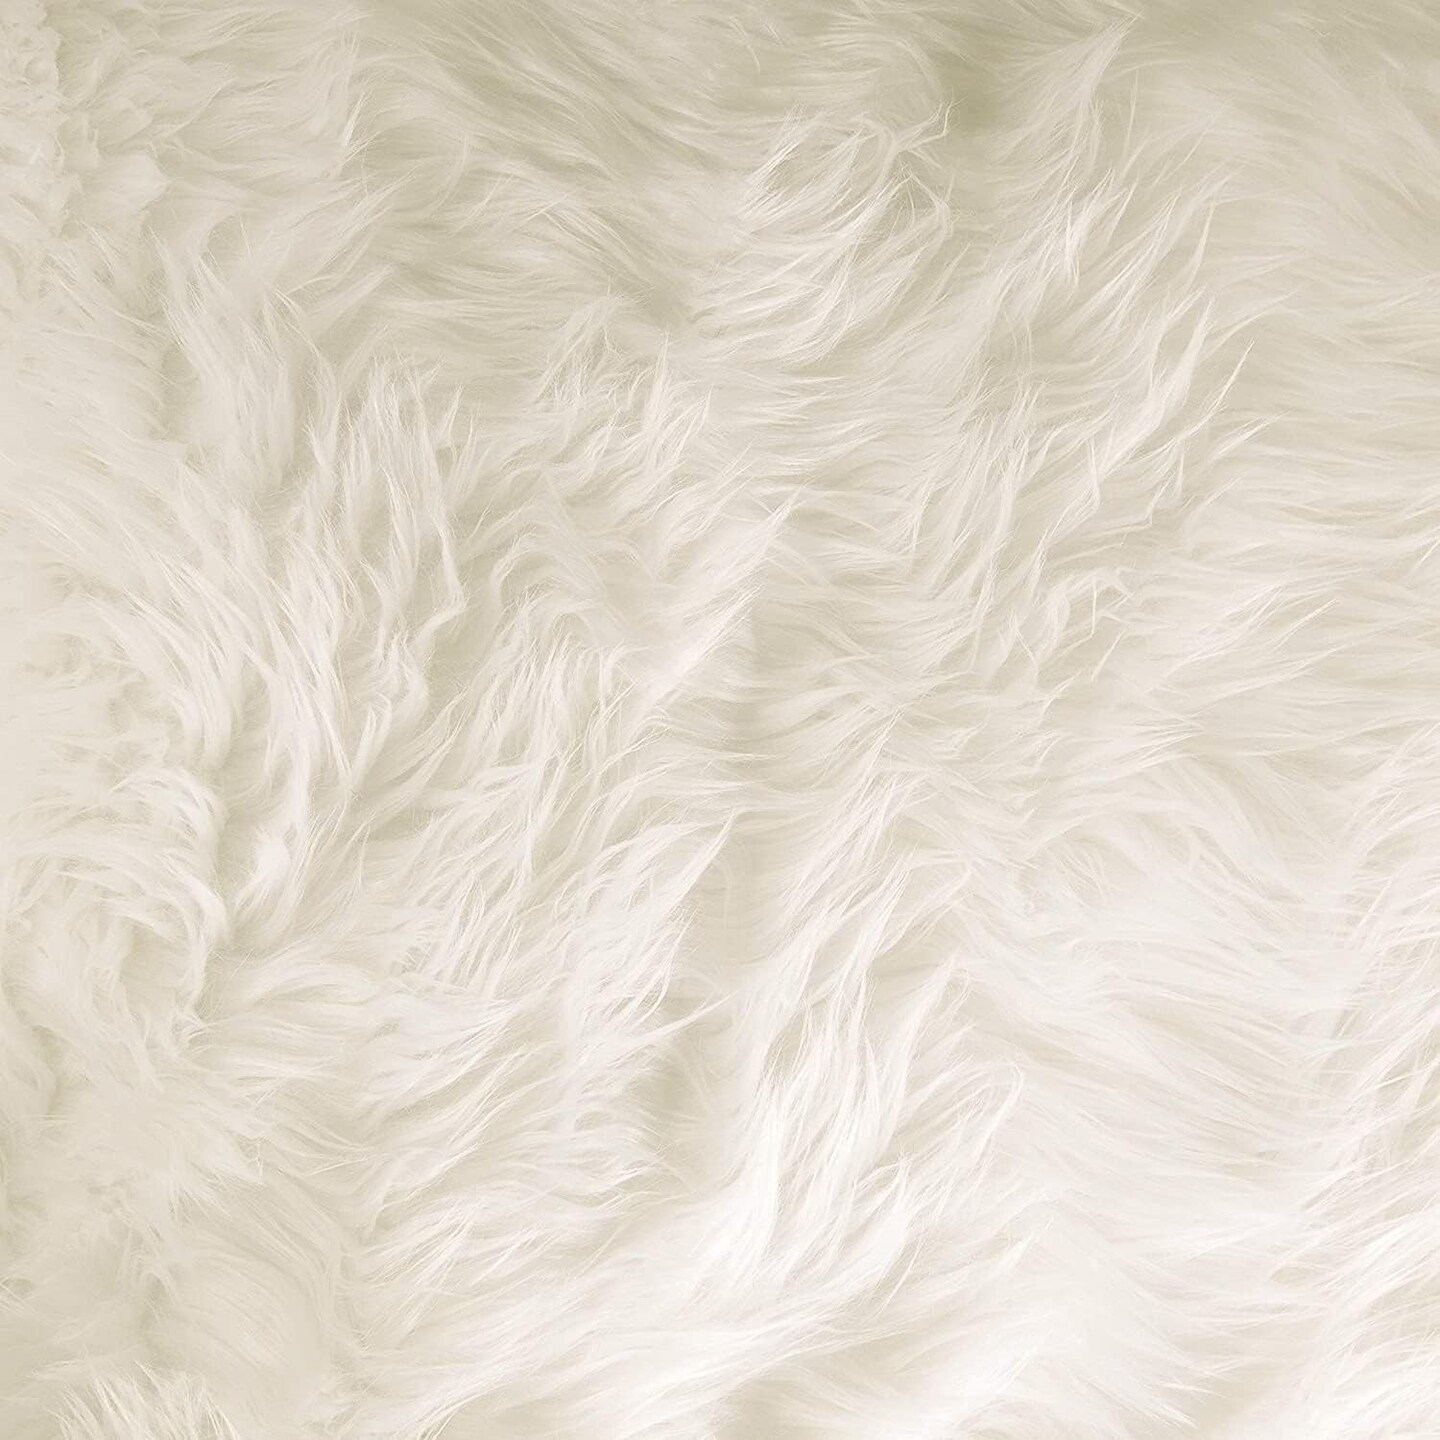 White Fur Fabric 